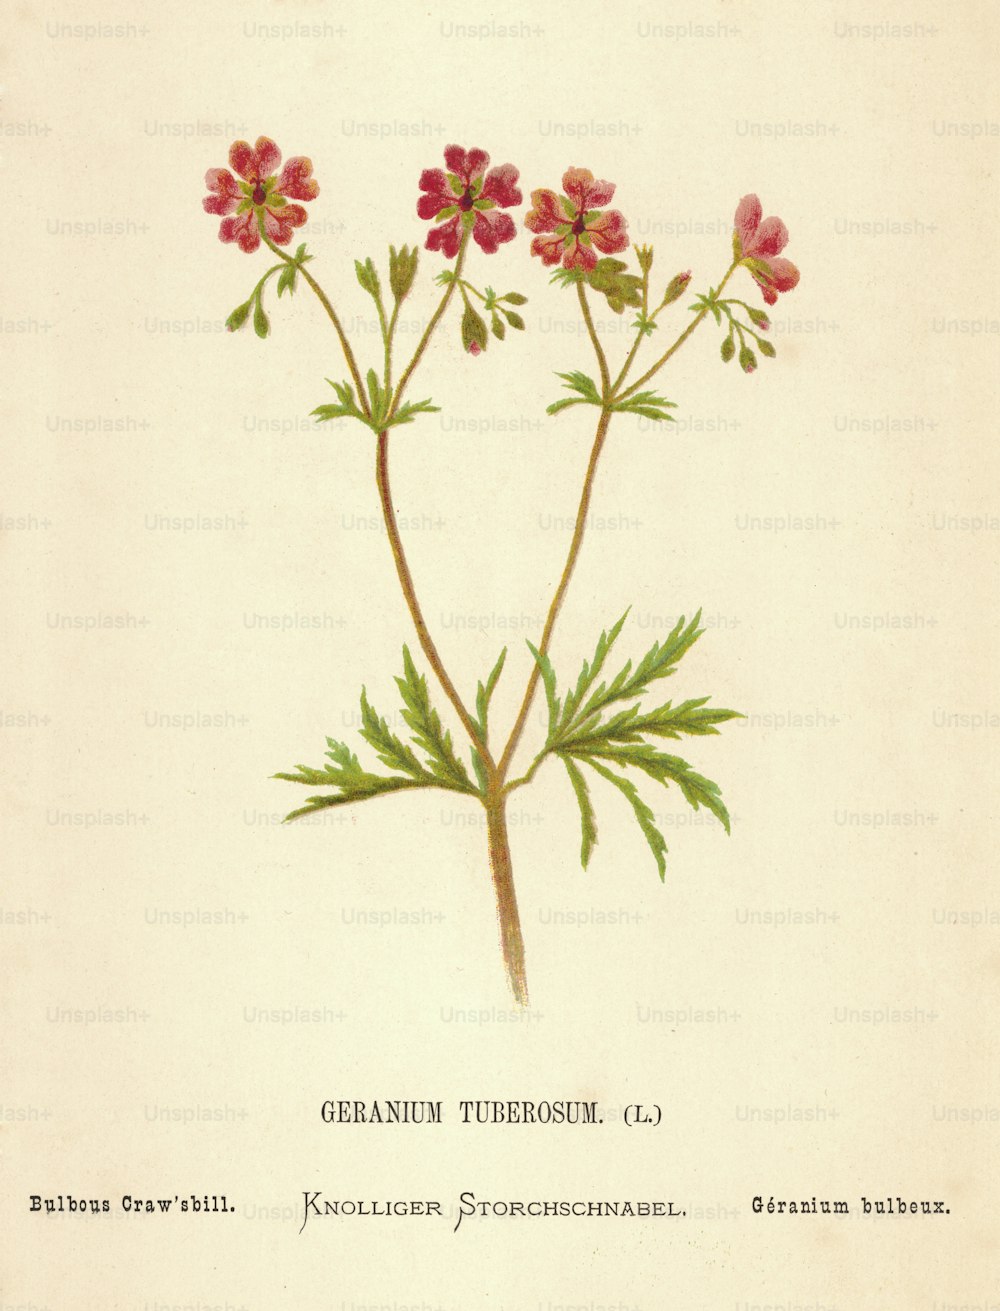 Un Geranium Tuberosum rojo, o pico de cangrejo bulboso, alrededor de 1850. (Foto de Hulton Archive/Getty Images)